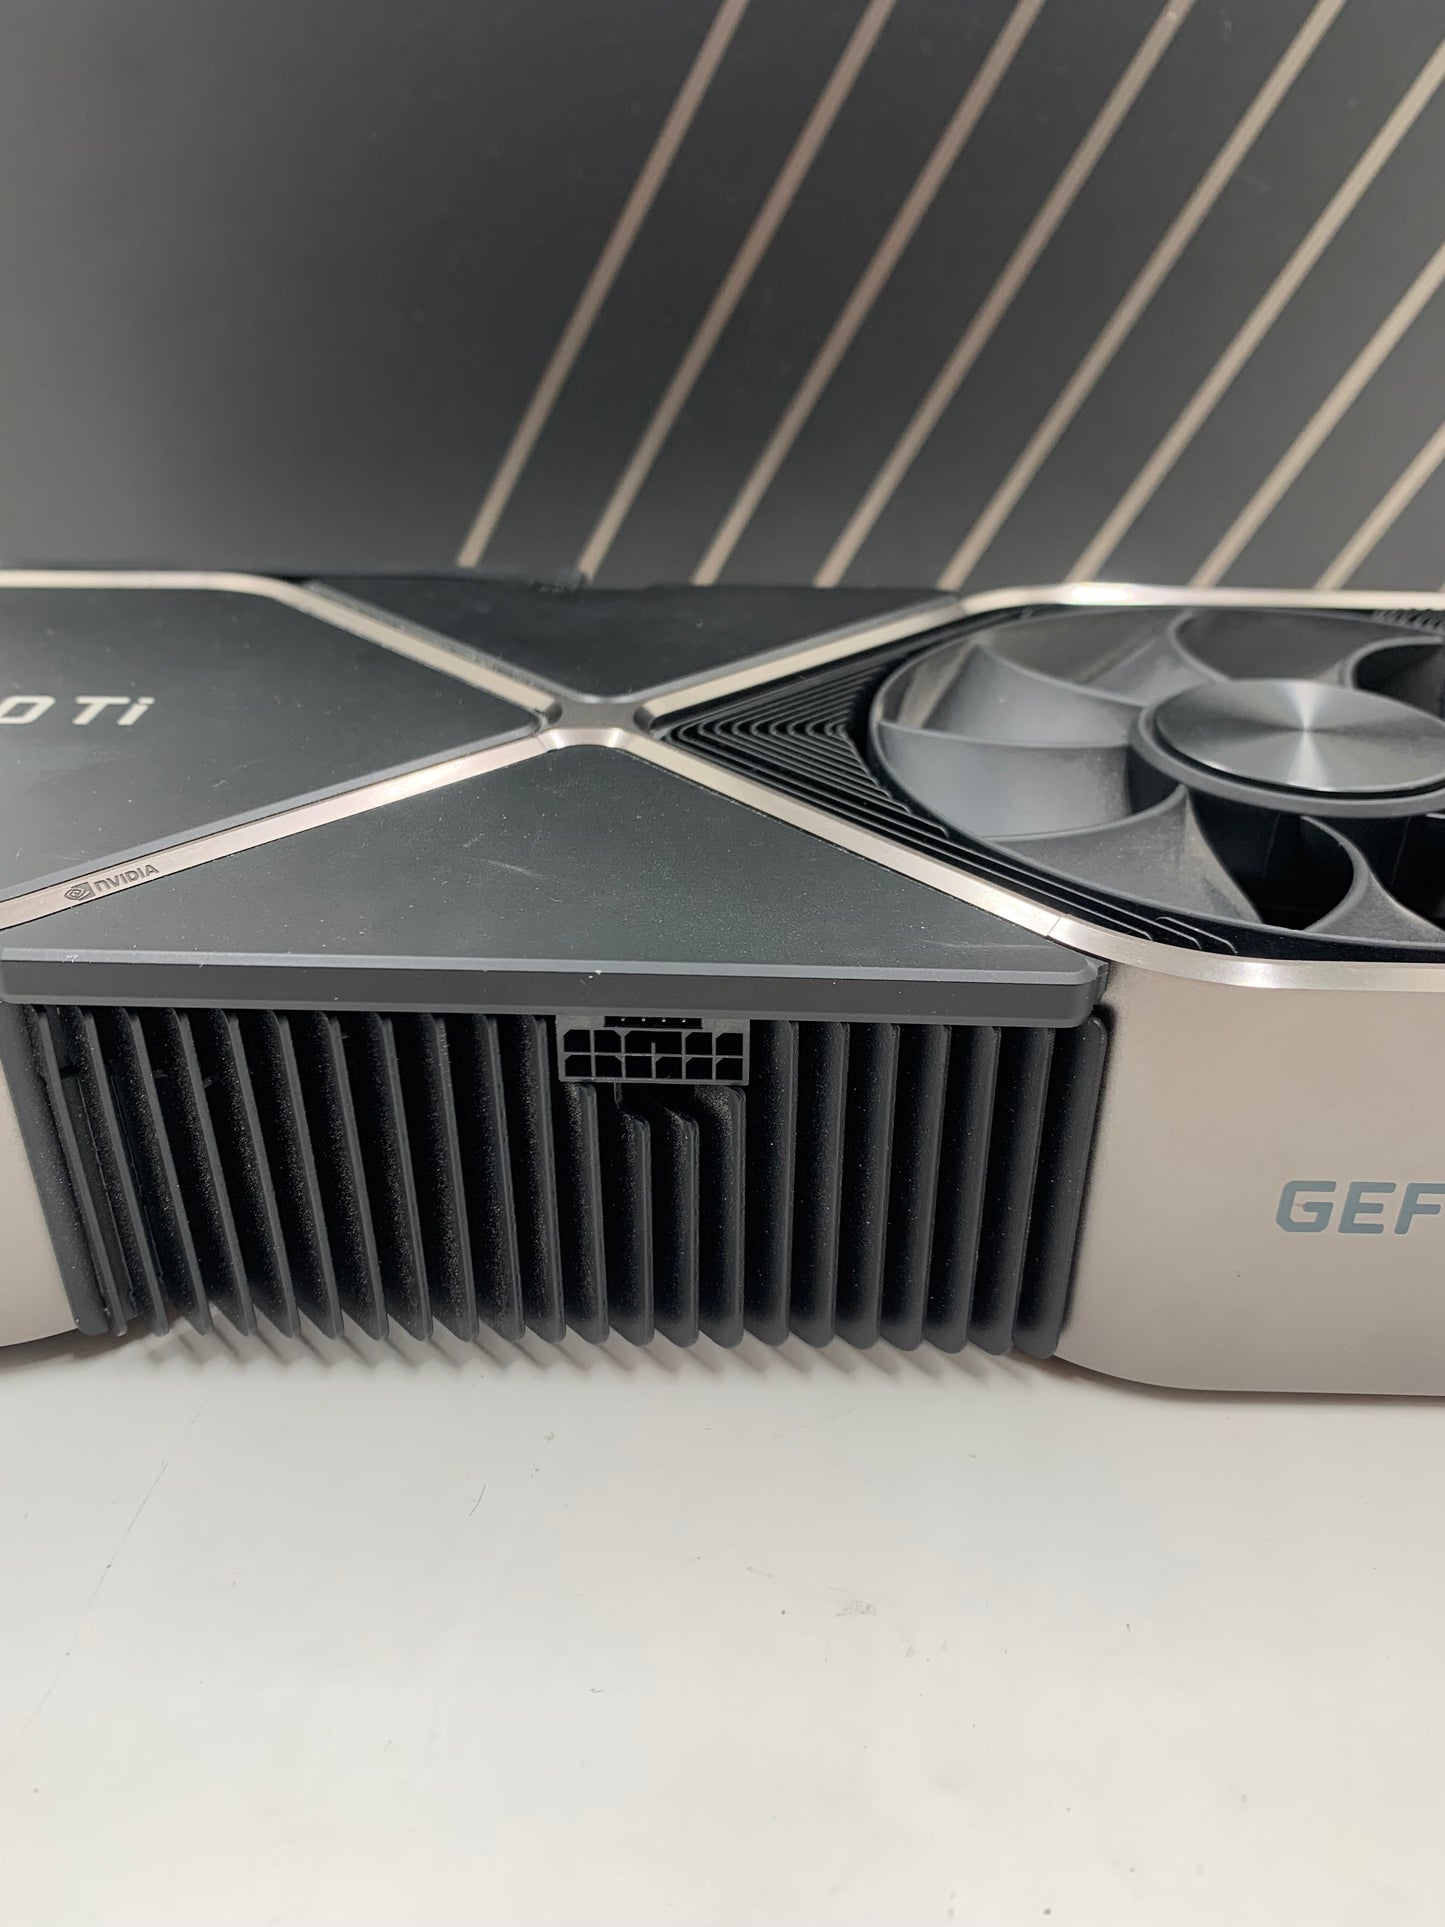 Nvidia GeForce RTX 3090 Ti Founders Edition 24GB GDDR6X - A